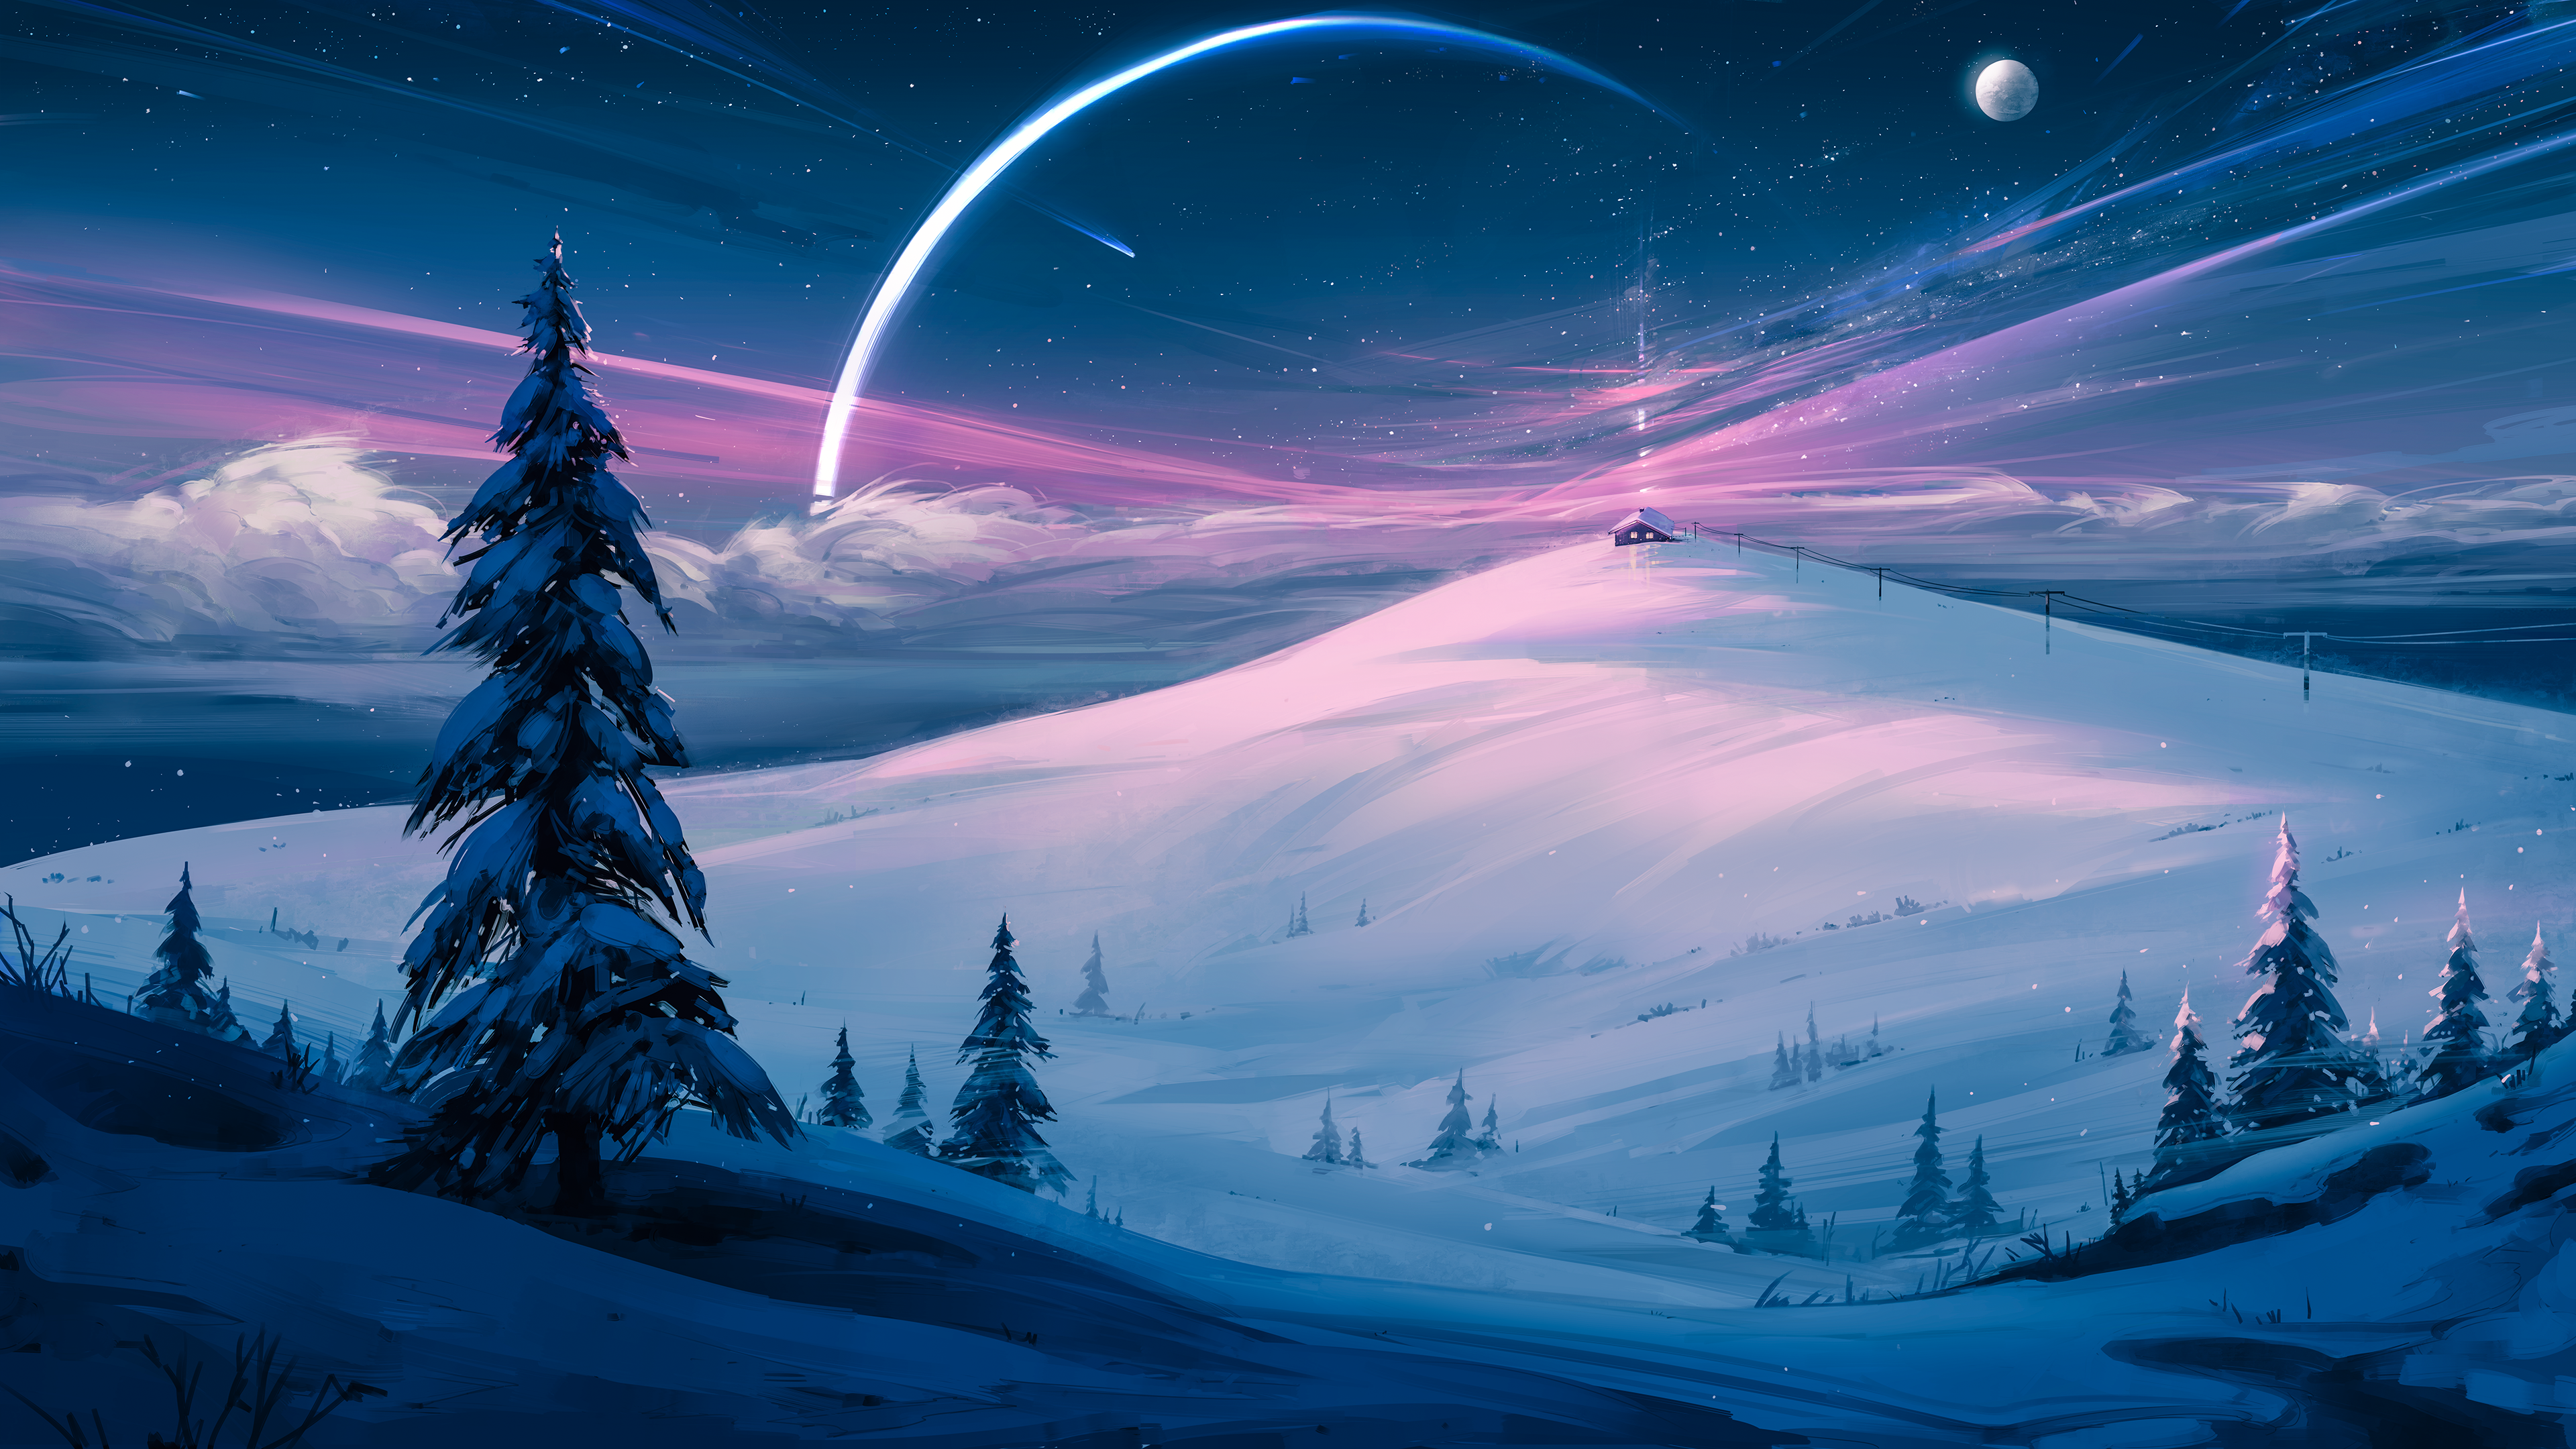 Aenami Digital Art Artwork Landscape Snow Winter 4K Nature Mountains Clouds Trees Stars Starry Night 3840x2160